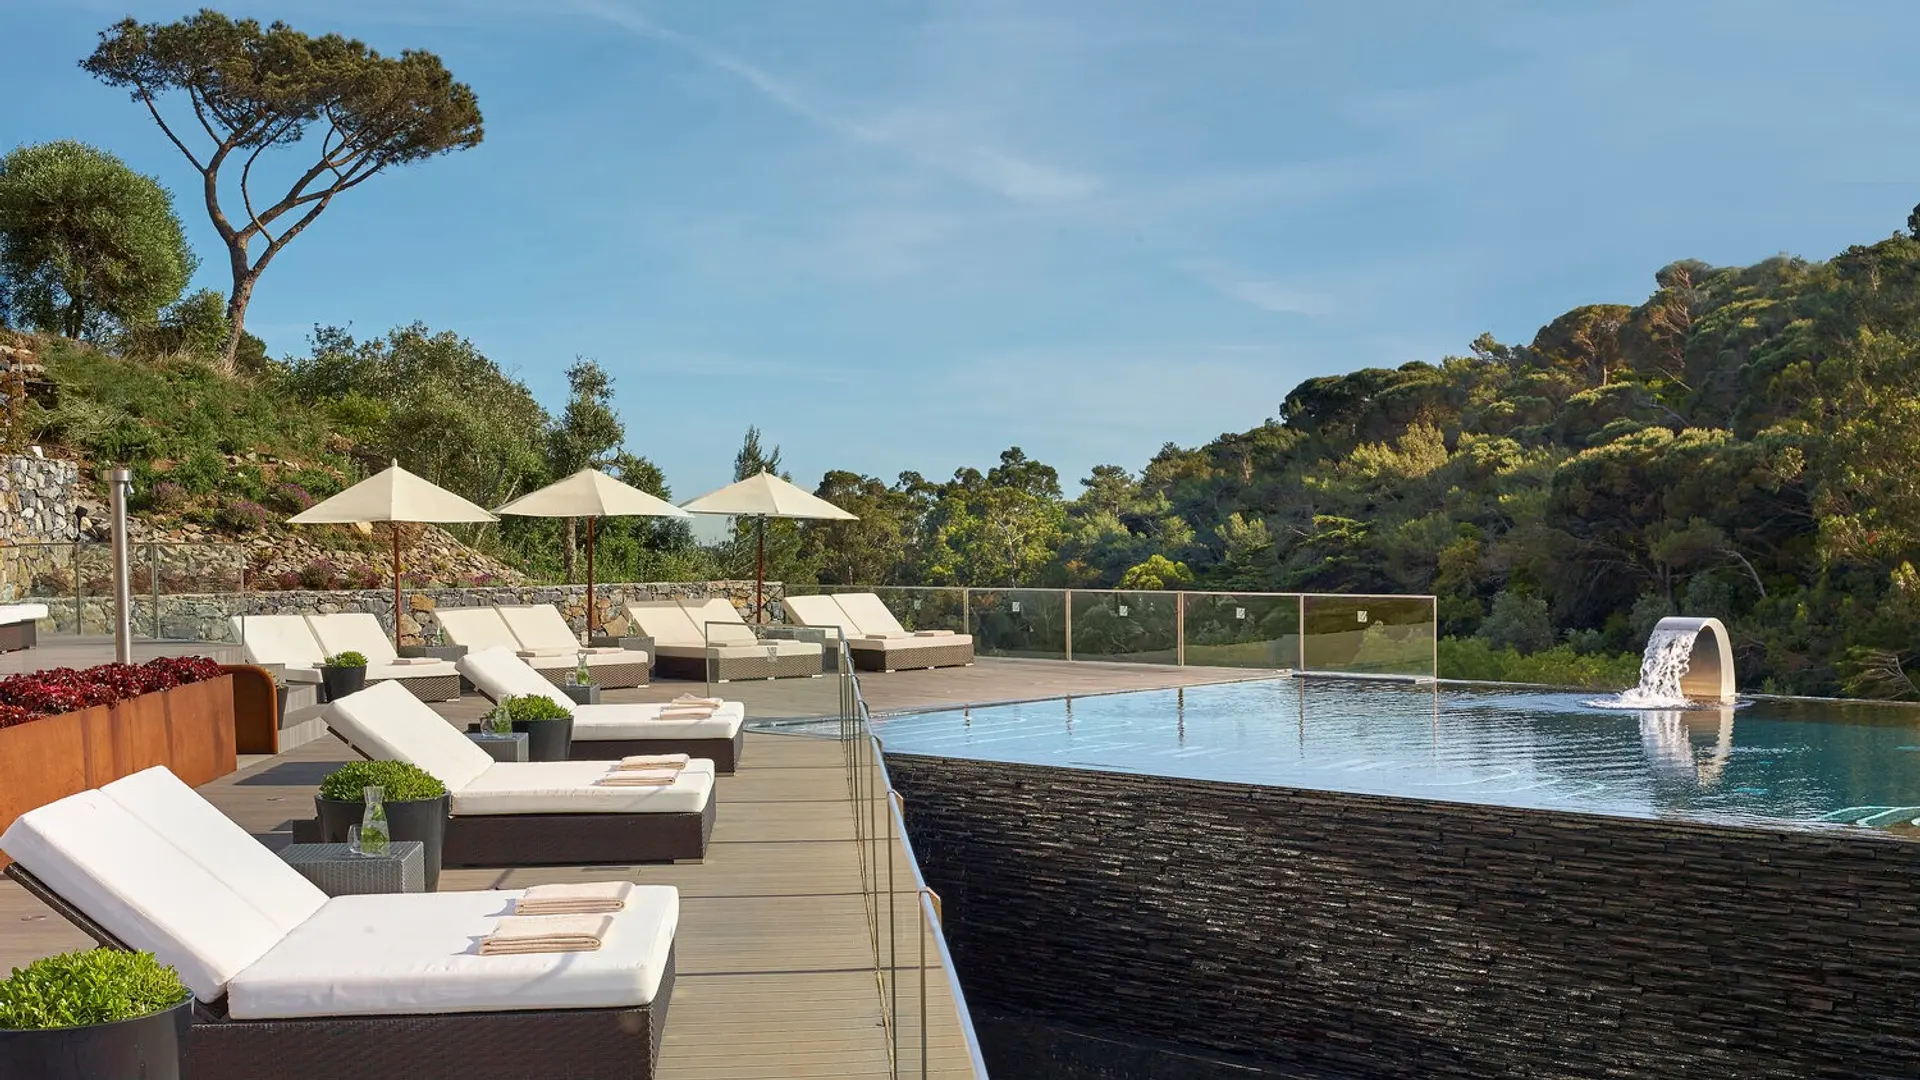 Hotel review Service & Facilities' - Penha Longa Golf Resort - 8